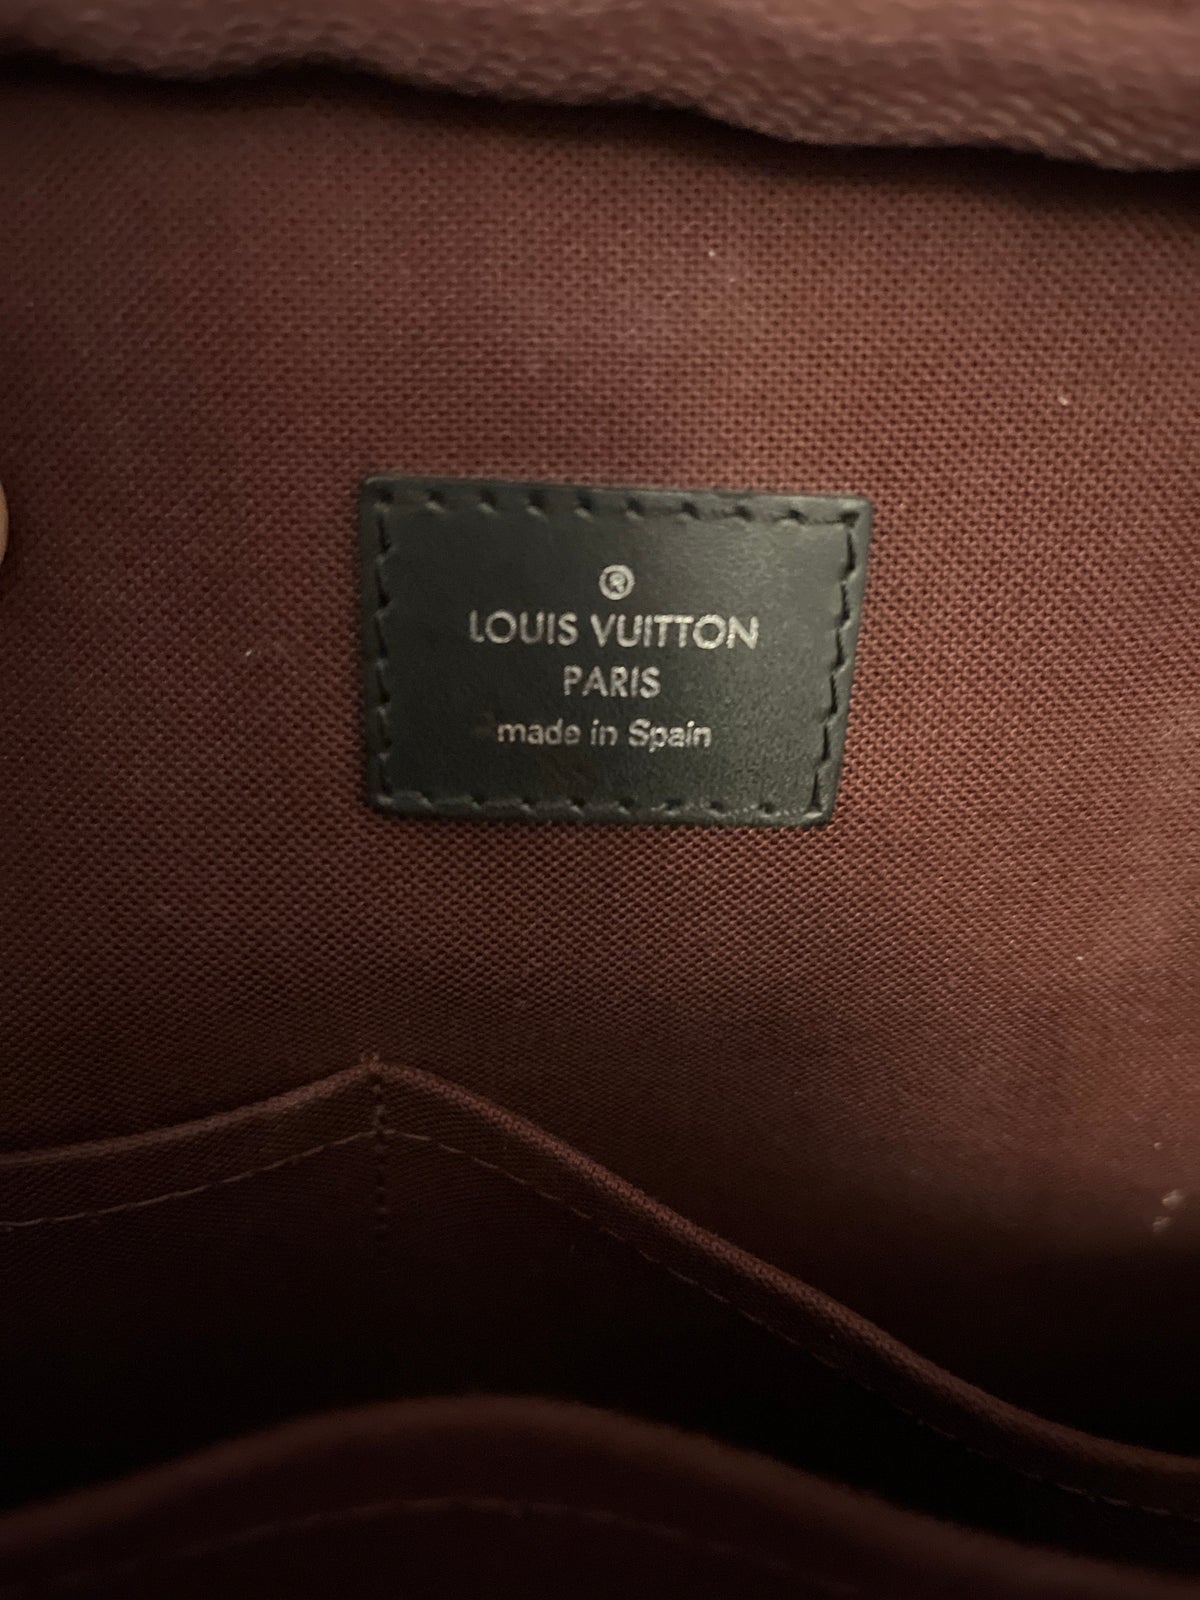 Andet, Louis Vuitton, Brown